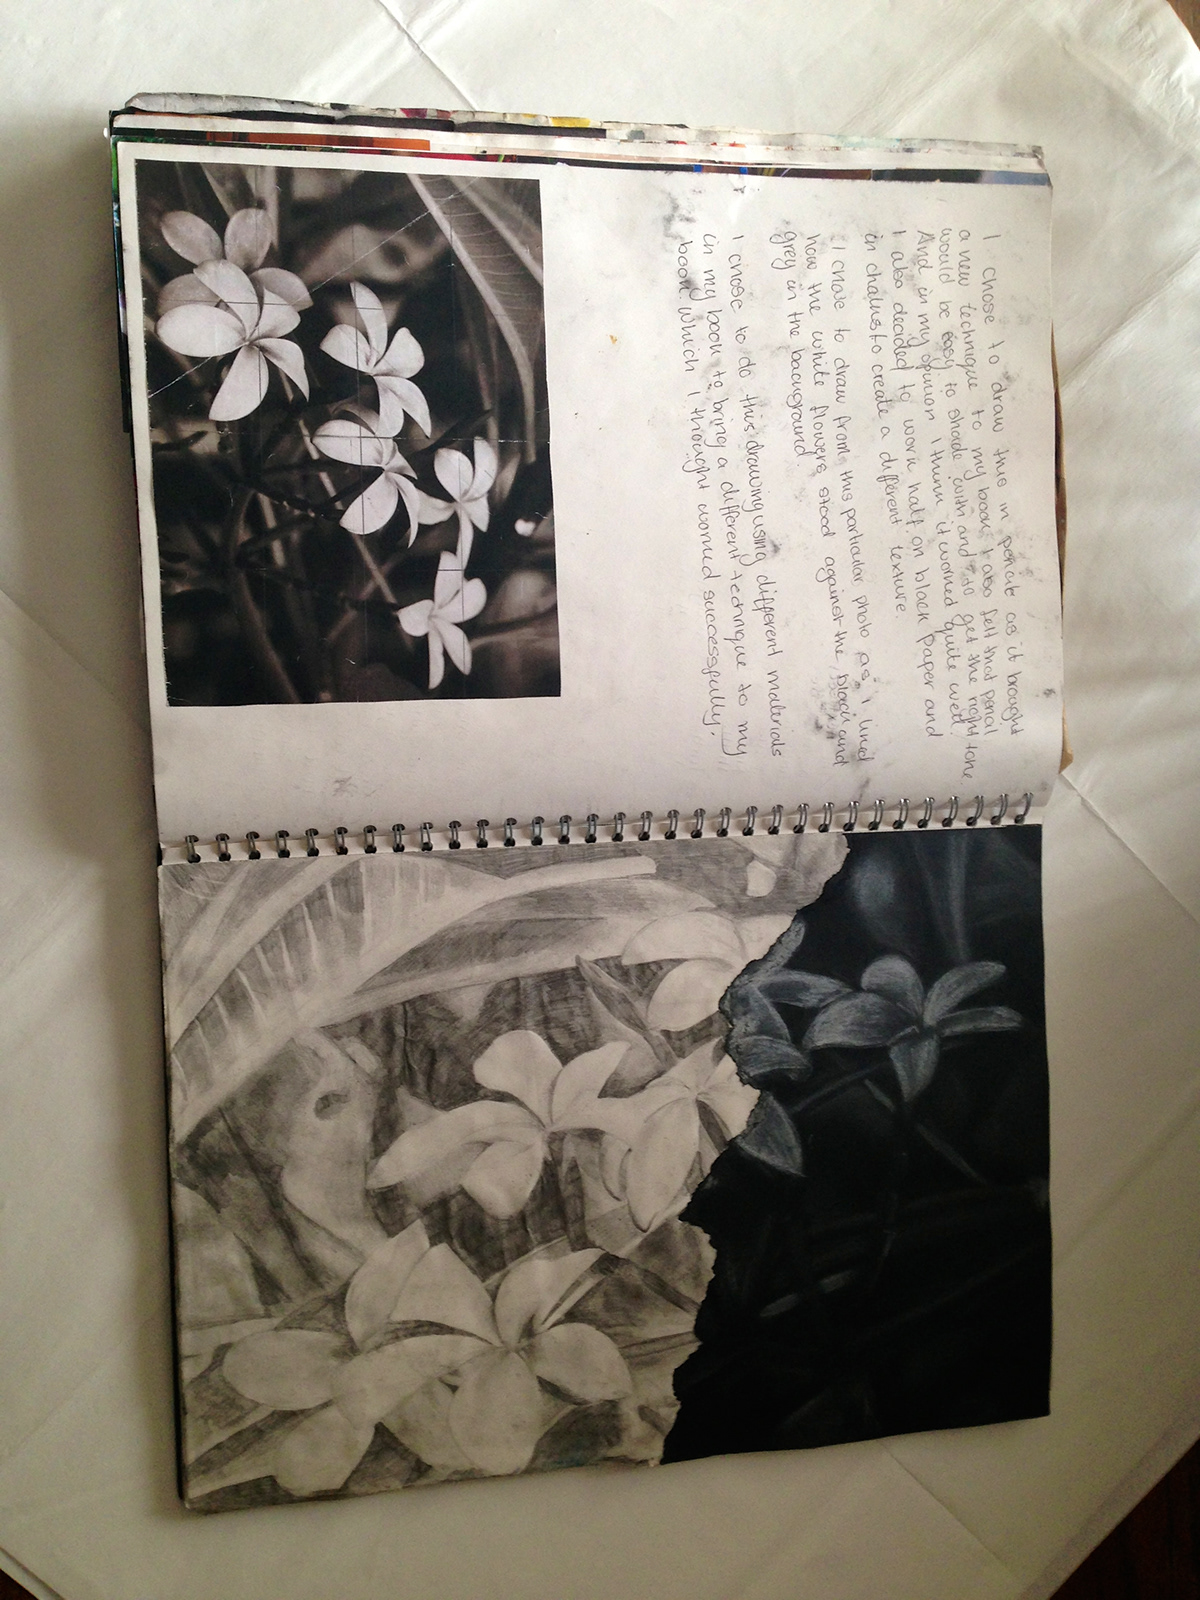 art sketchbook paint enviroment landscapes bob barker leaves Flowers creative